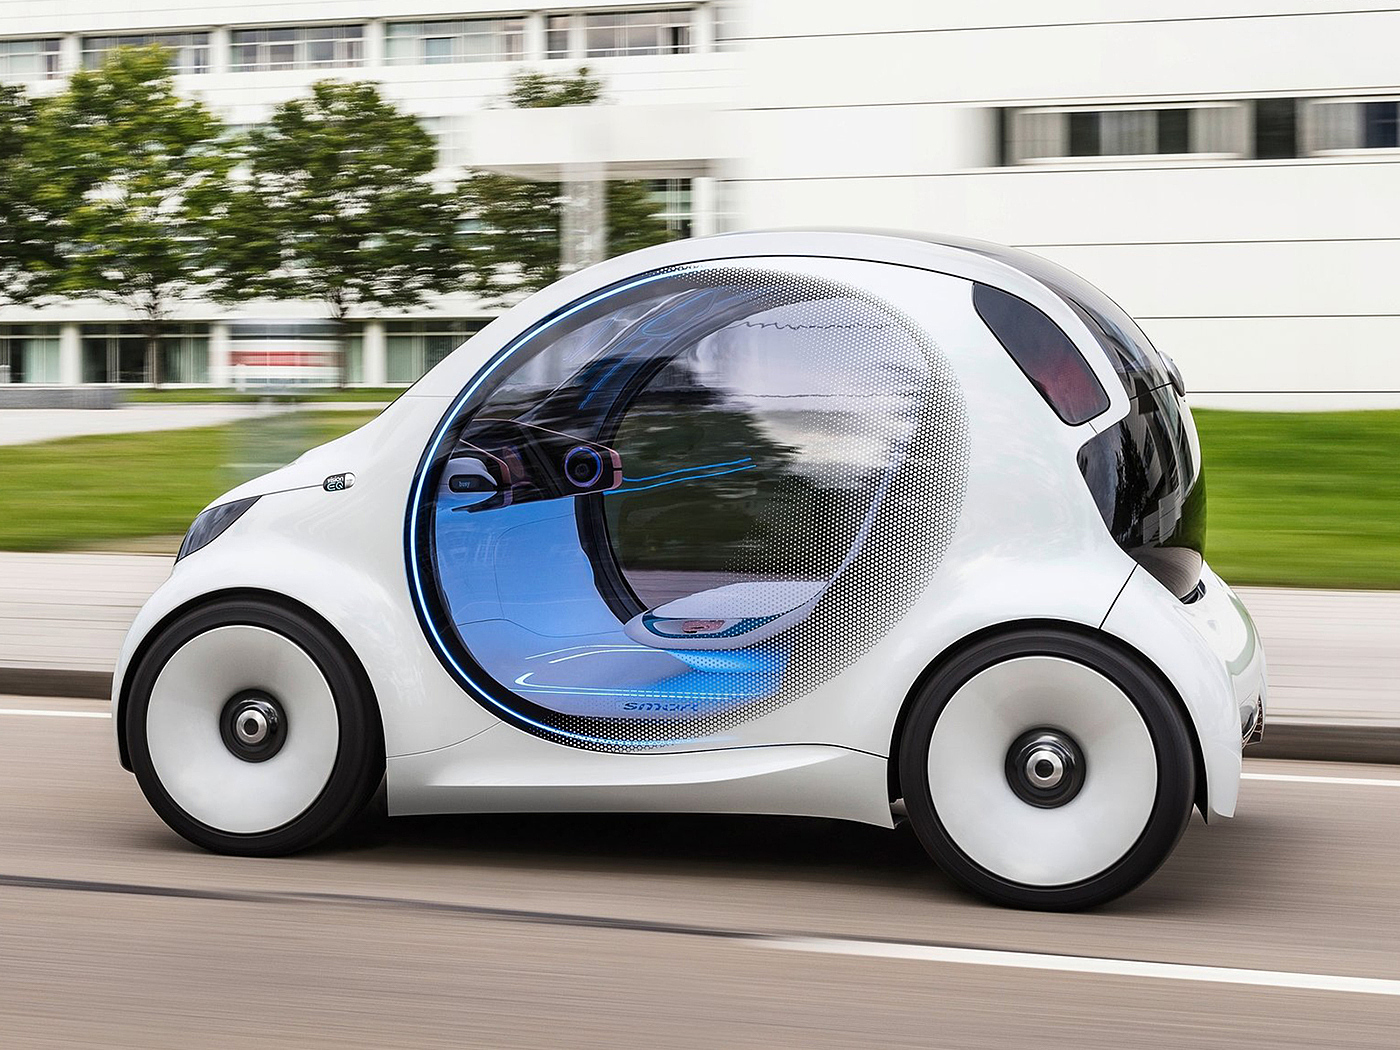 Car Design Pro，设计，未来，智能，车，交通，